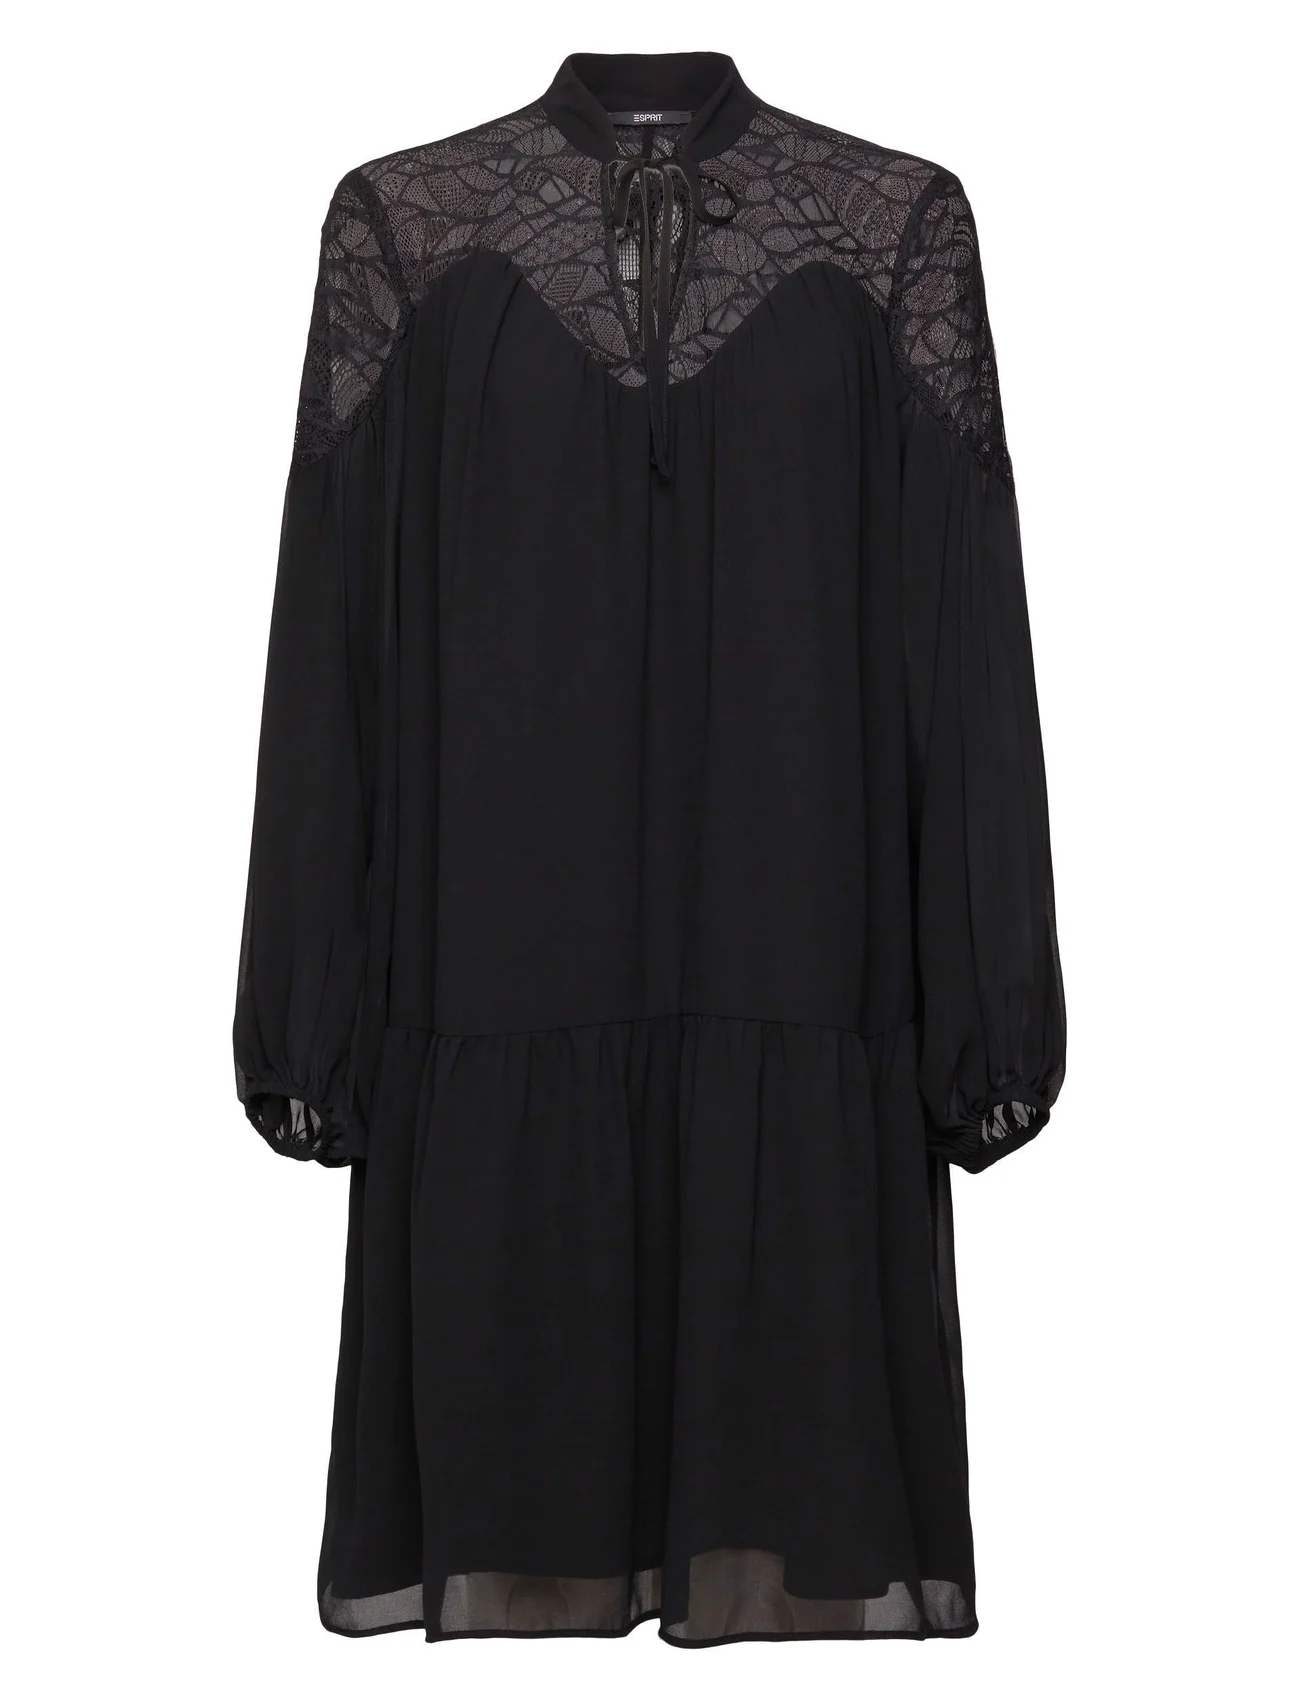 Esprit Collection - Chiffon mini dress with lace - festmode zu outlet-preisen - black - 0